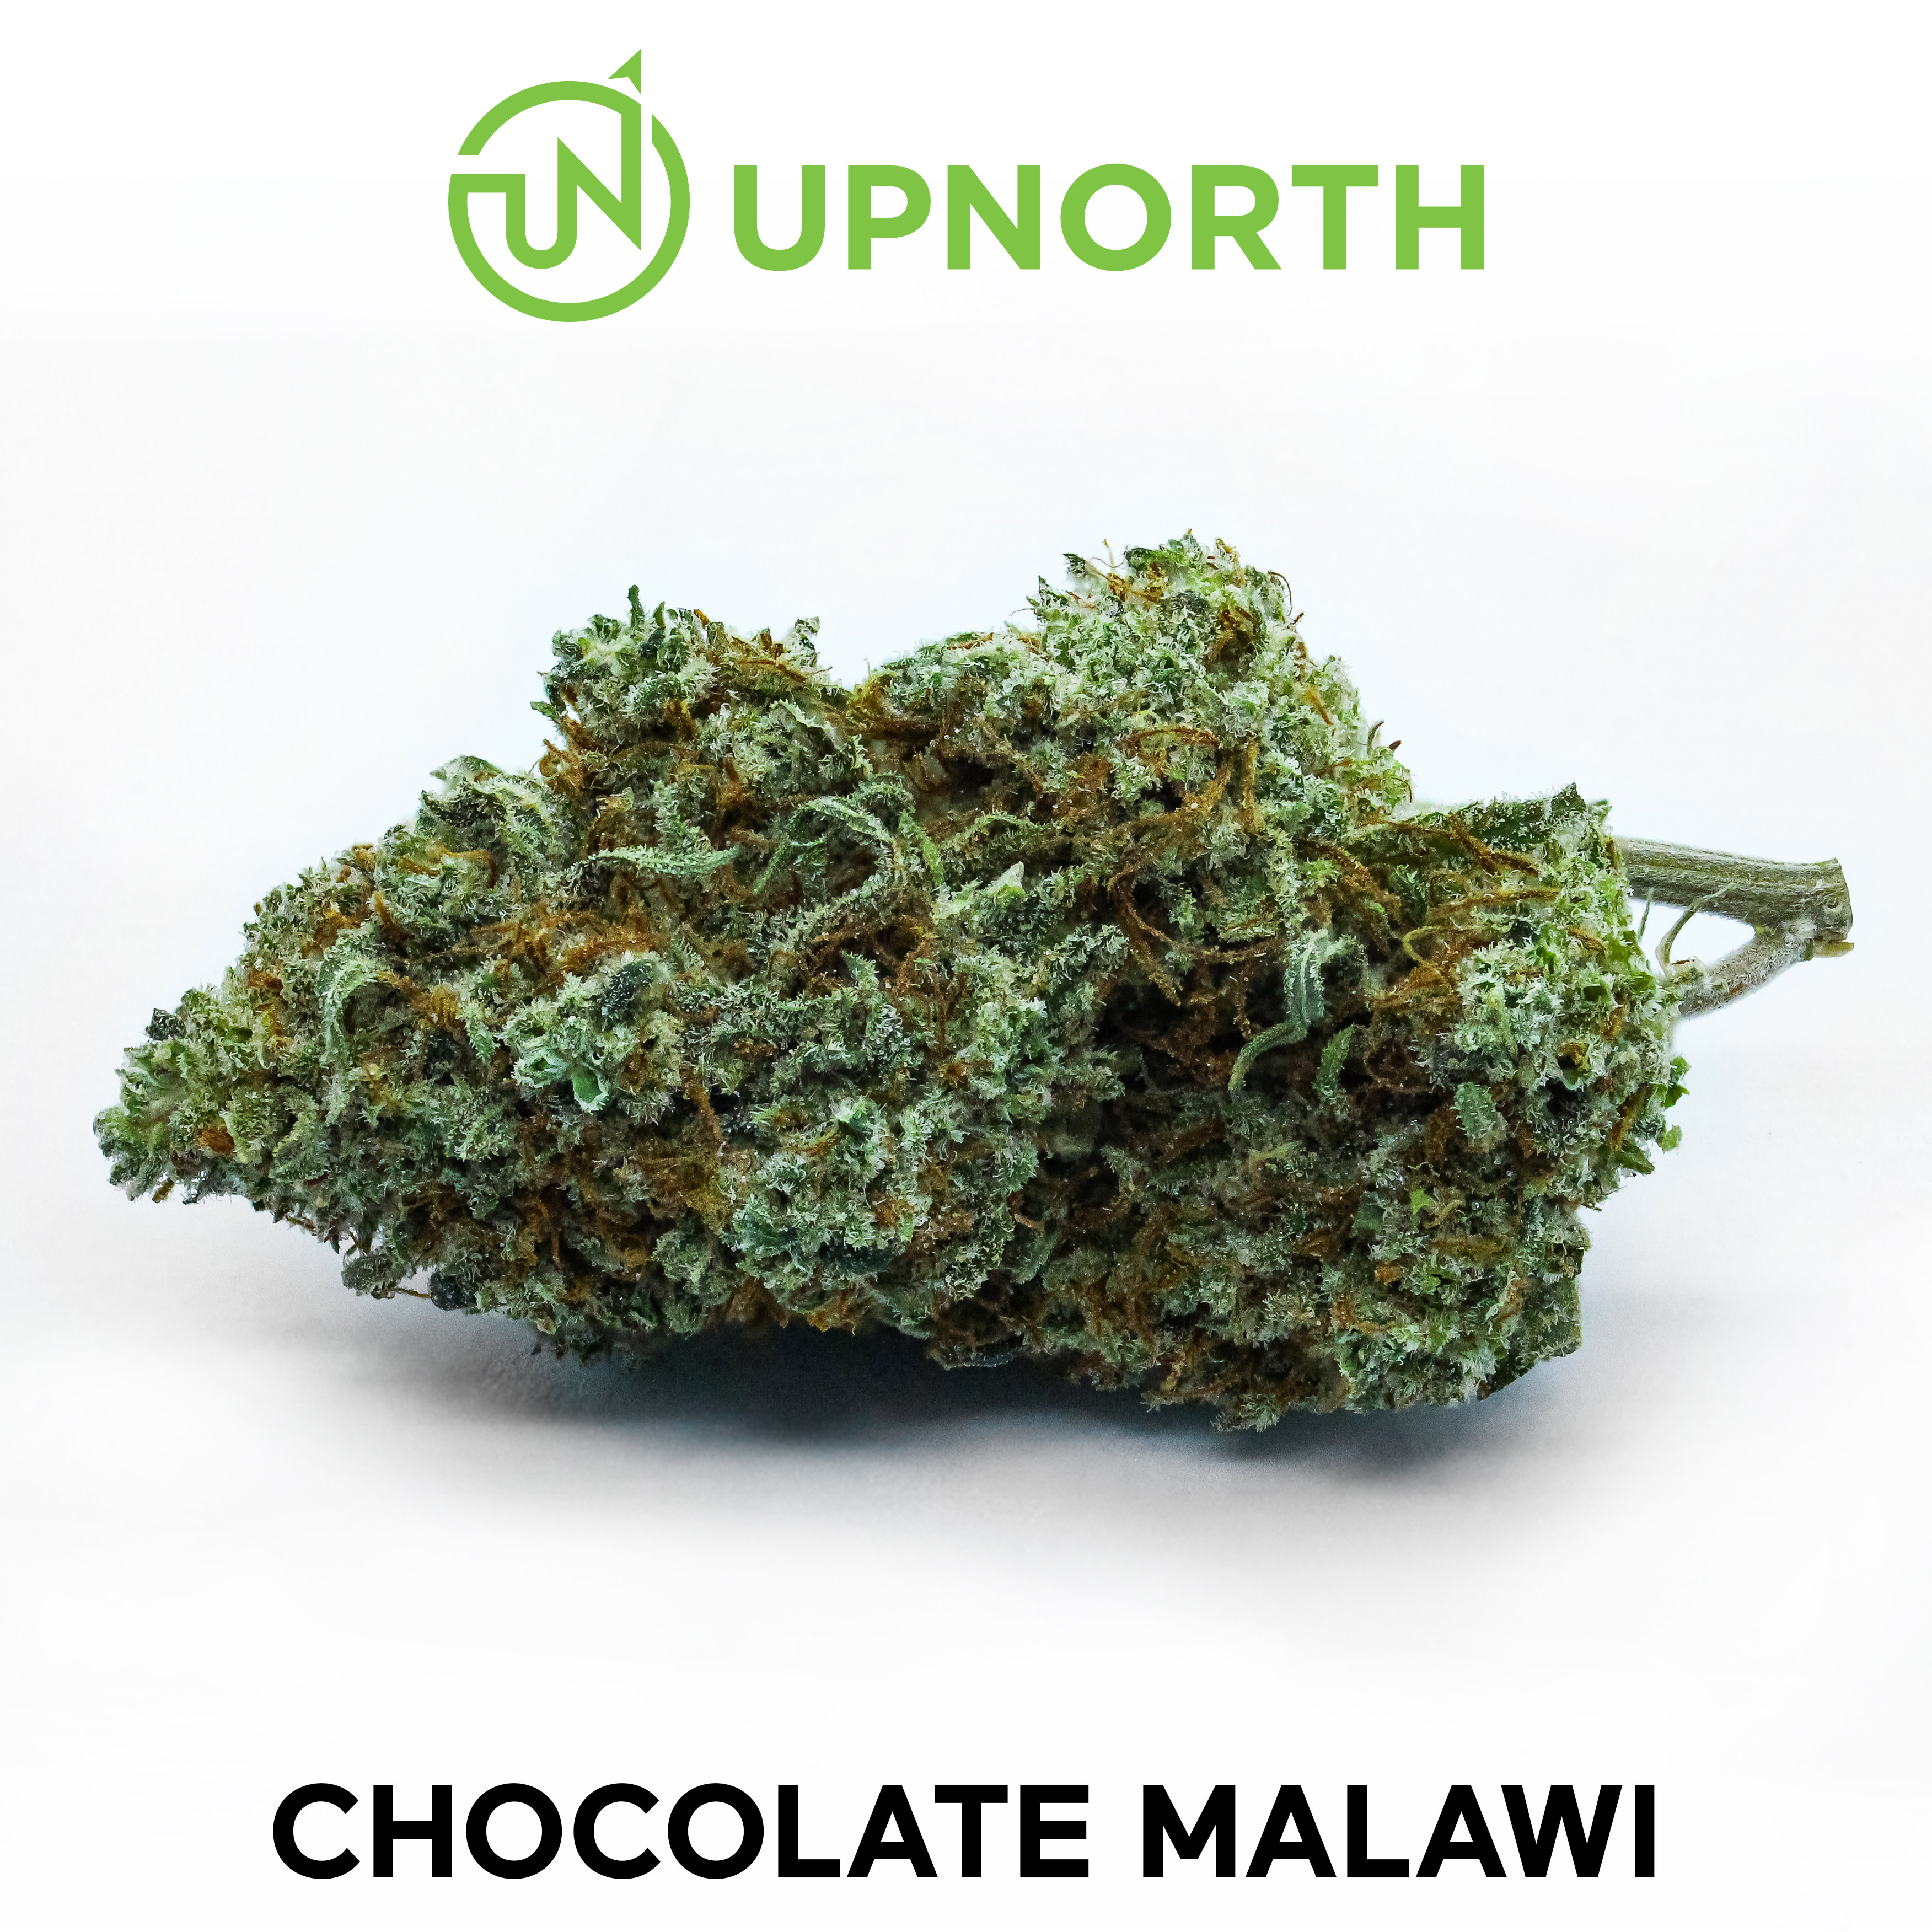 Chocolate Malawi Cannabis Strain WhiteBG